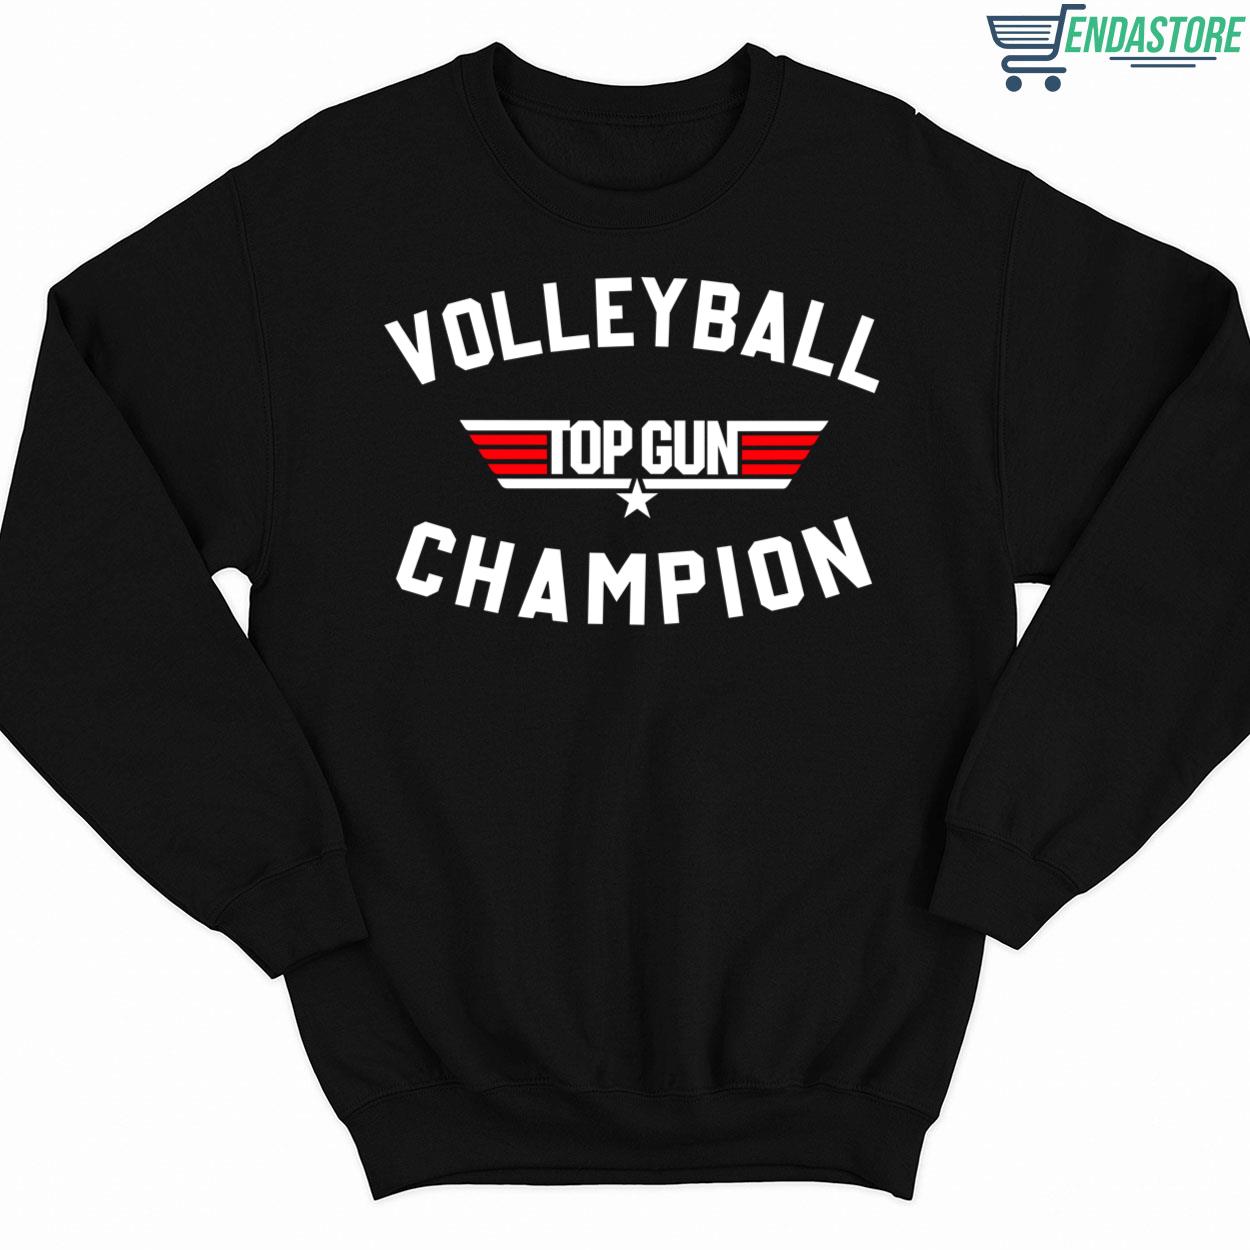 Volleyball Top Gun Champion Hoodie - Endastore.com